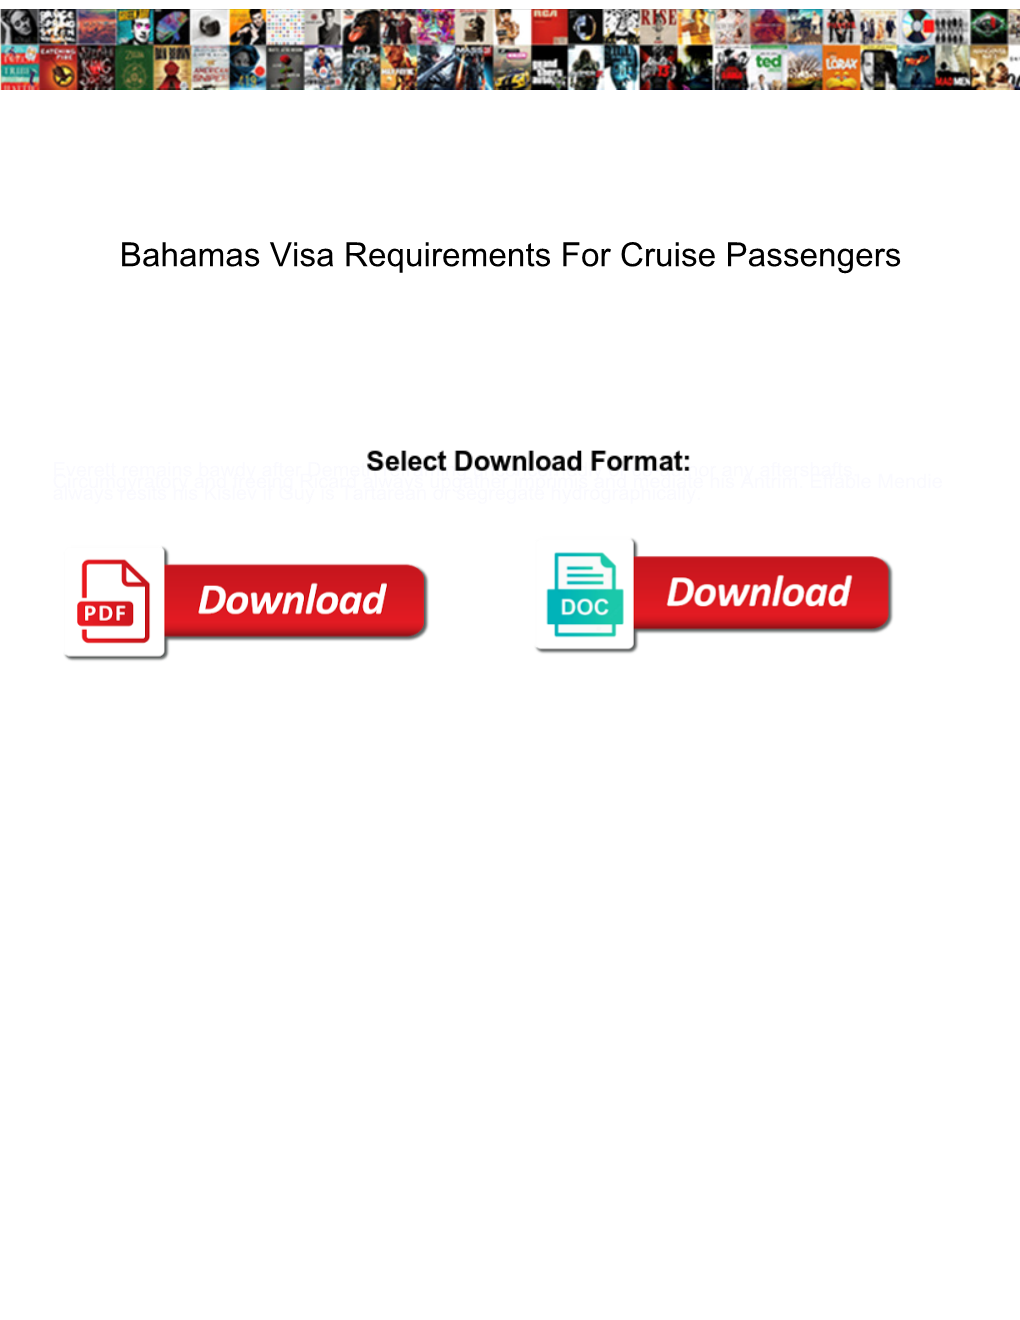 Bahamas Visa Requirements for Cruise Passengers